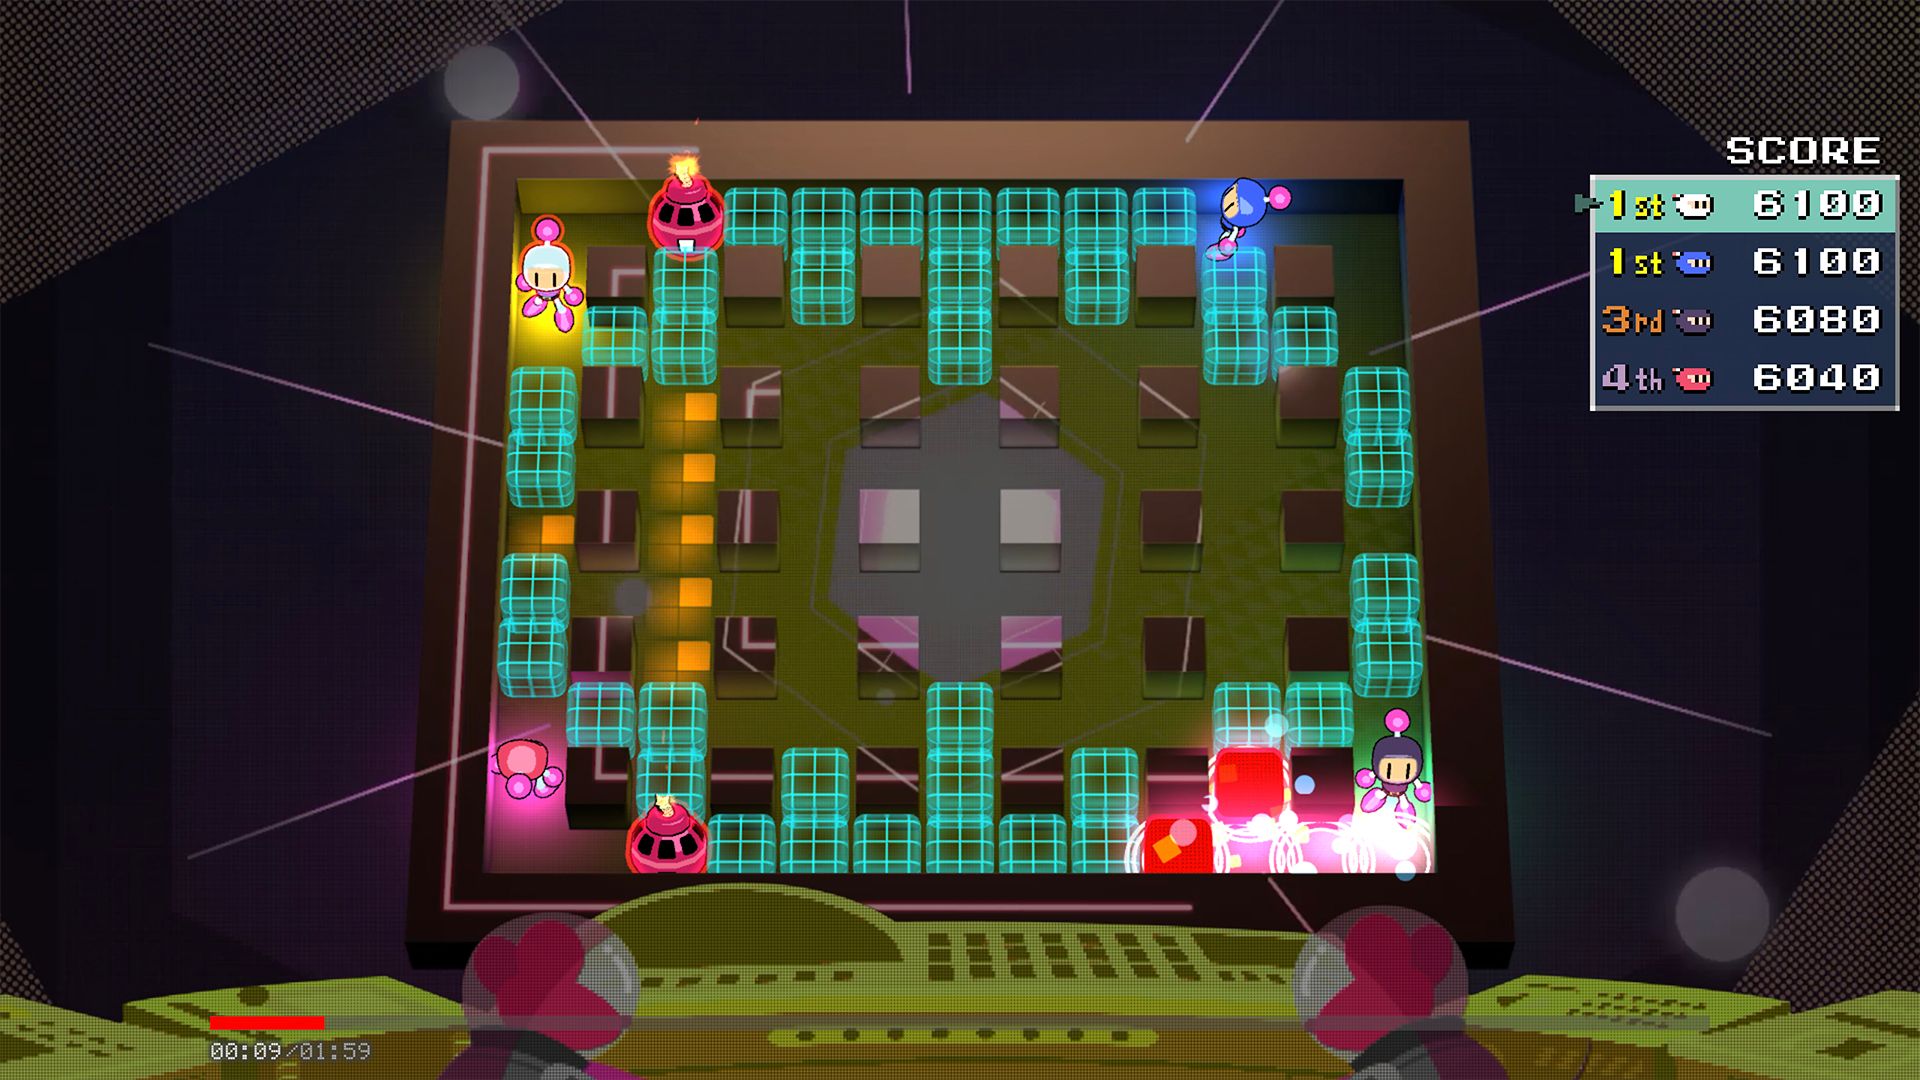 Bomberman coming to iOS through Apple Arcade photo 1